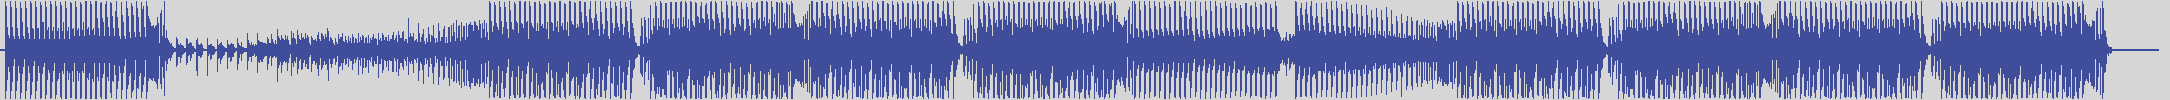 nf_boyz_records [NFY039] Bit Express - Deductio Onis [Ray O'bennett Ibized Mix] audio wave form